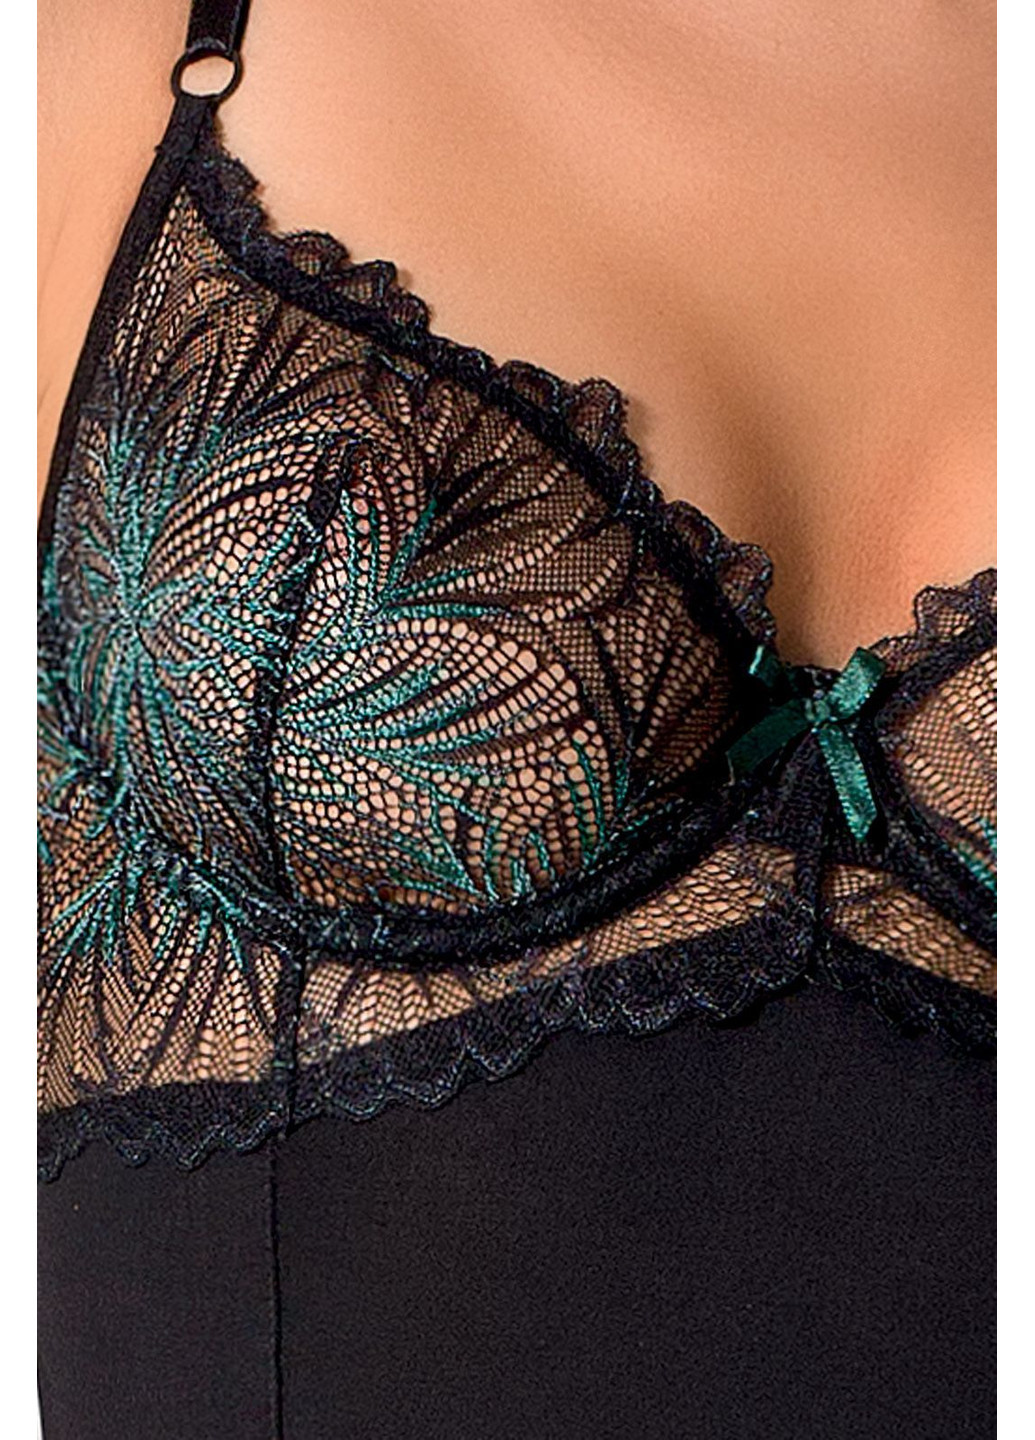 Чорний демісезонний корсет з пажами floris corset black s / m - exclusive Passion